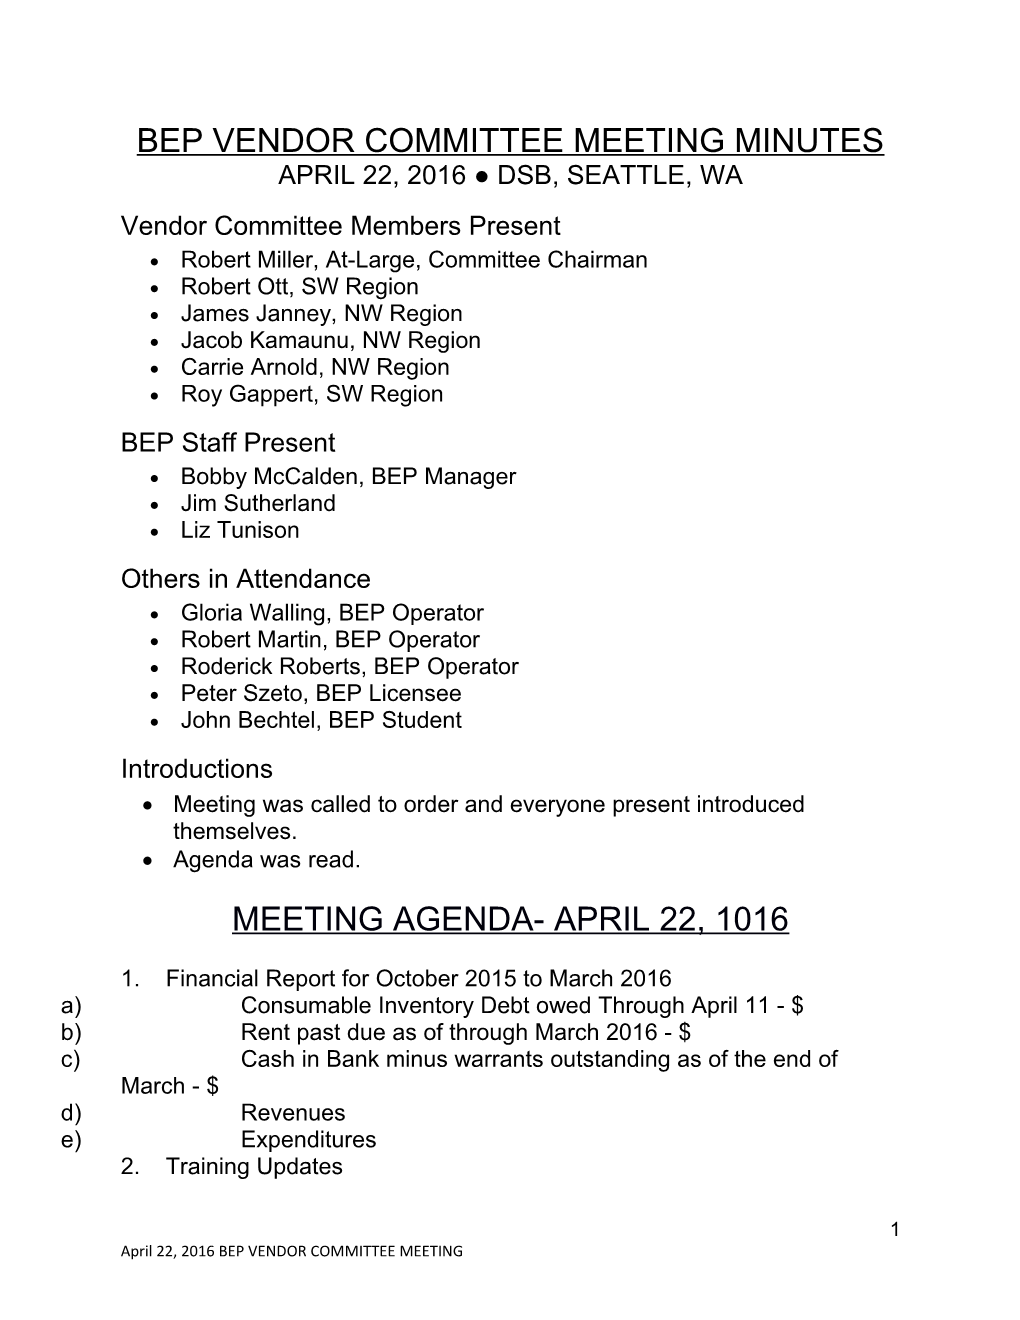 Vendor Committee Meeting Minutes